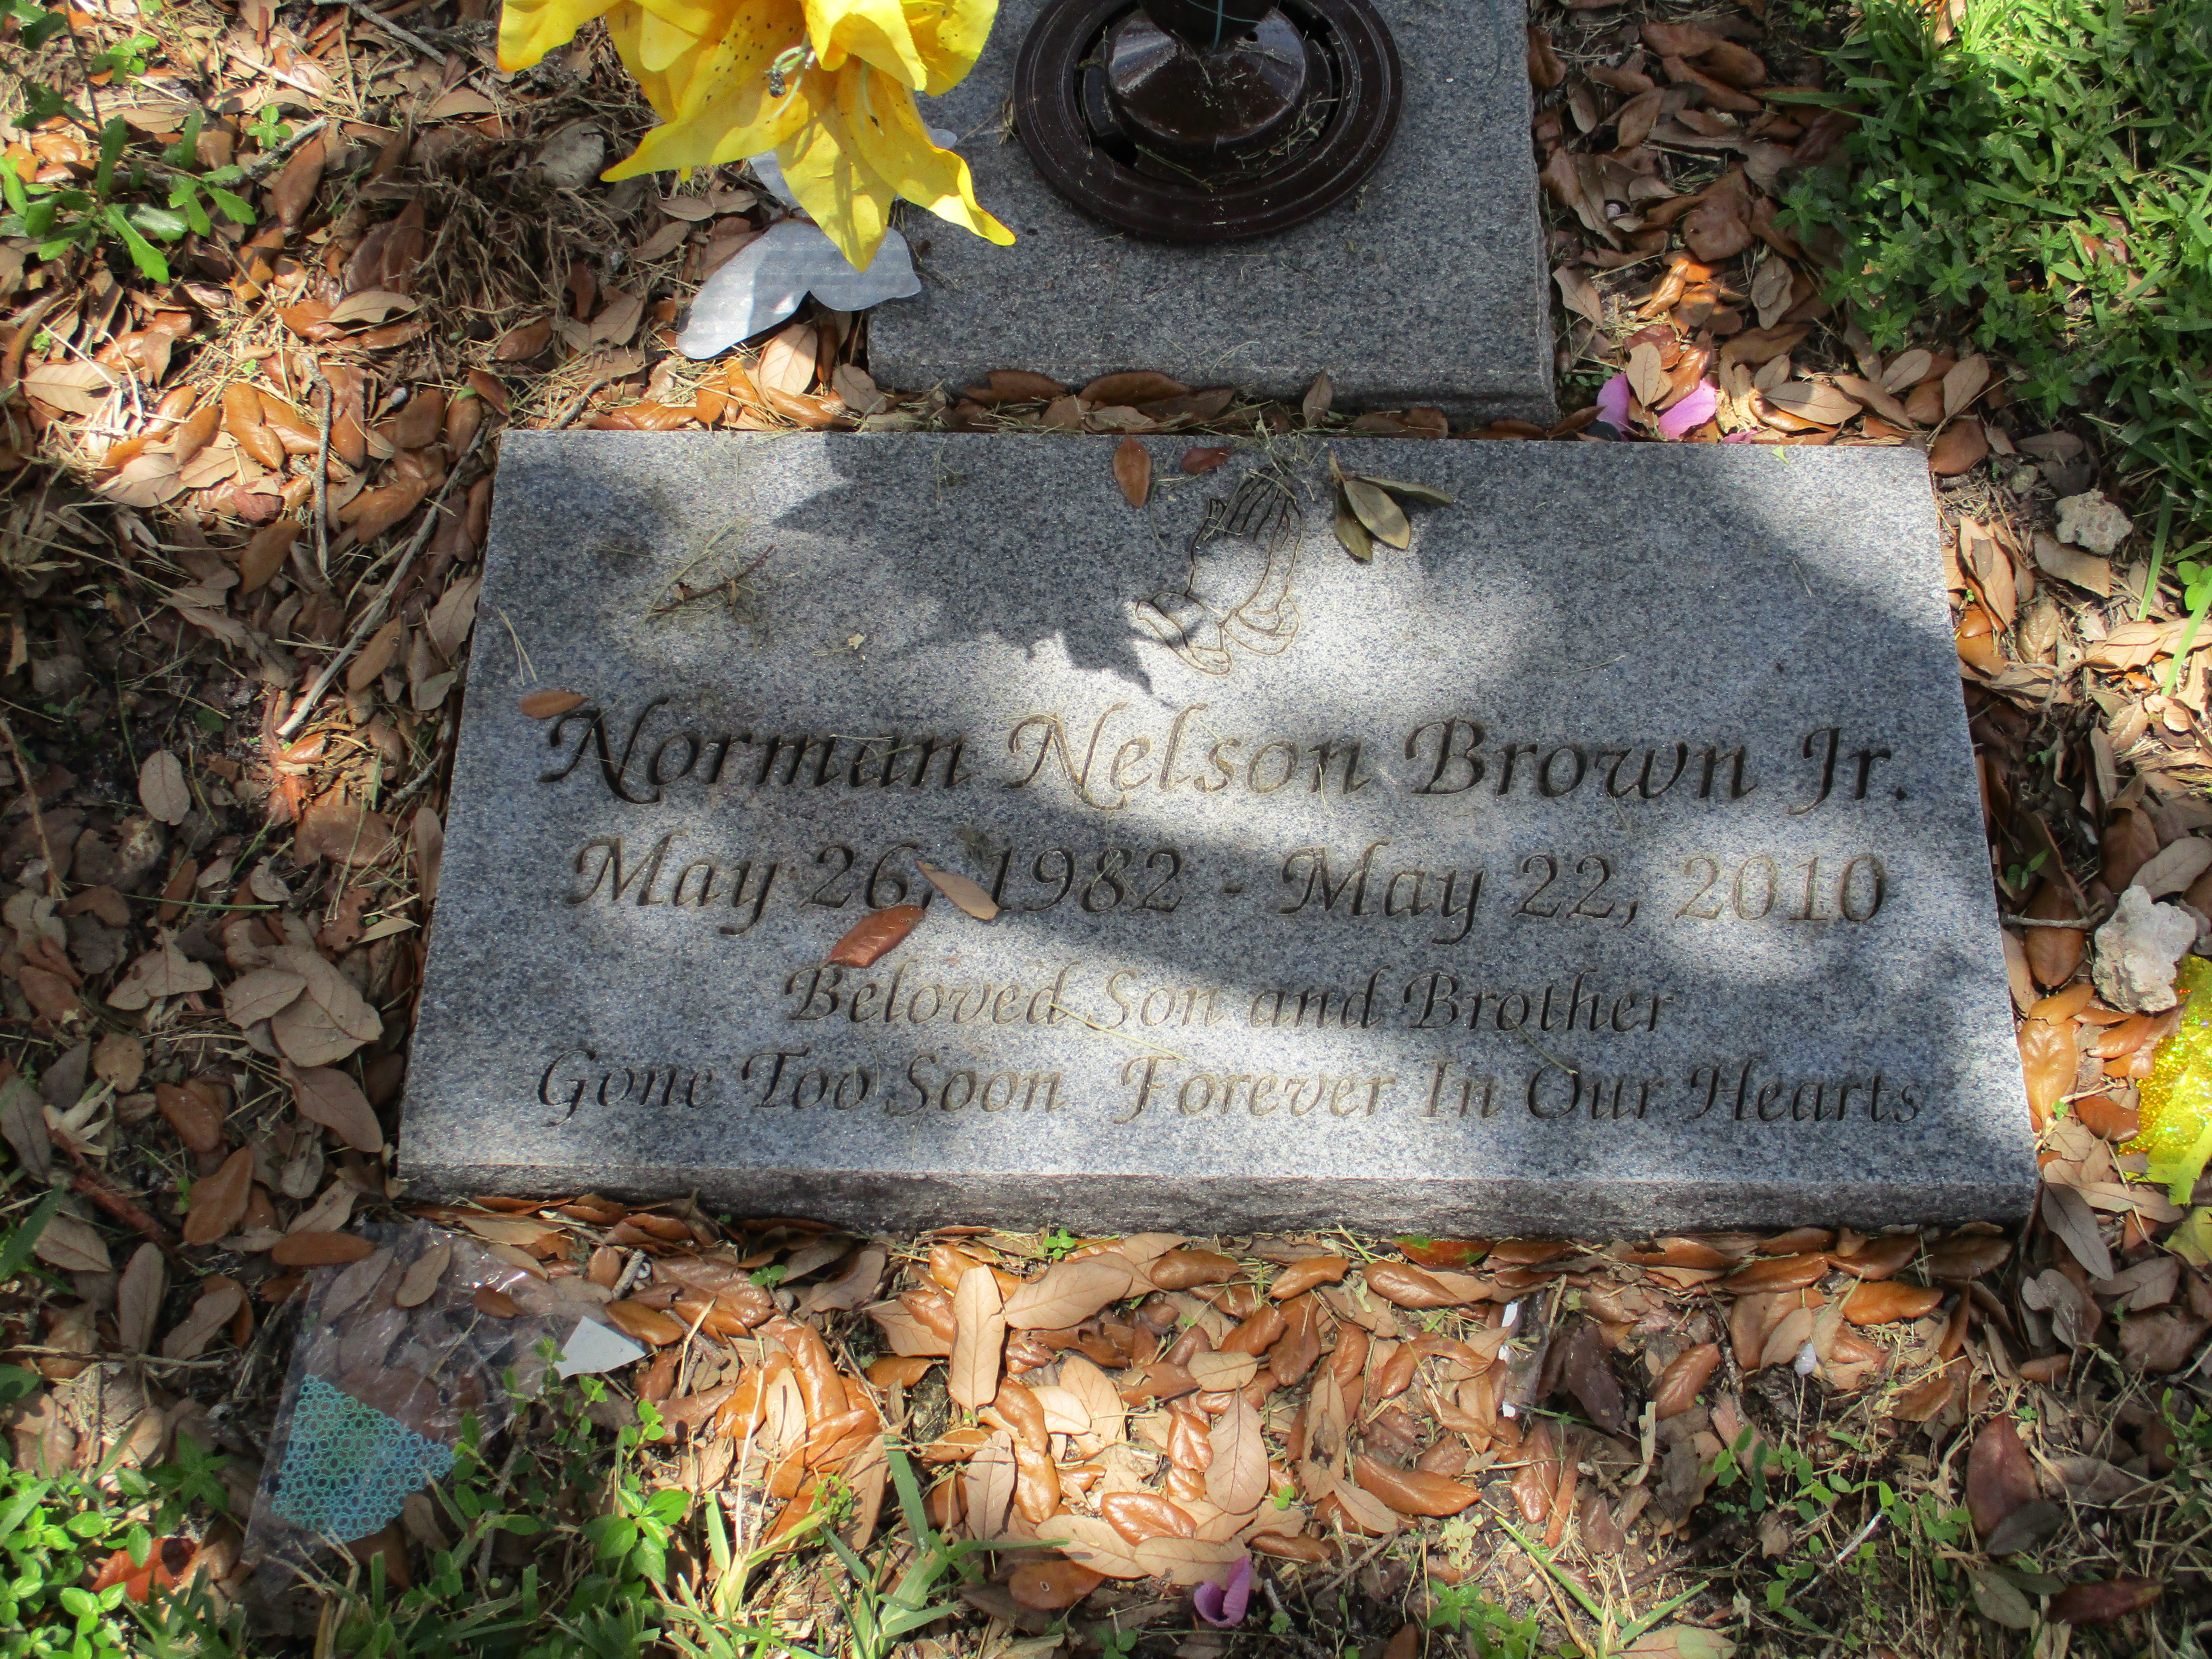 Norman Nelson Brown, Jr